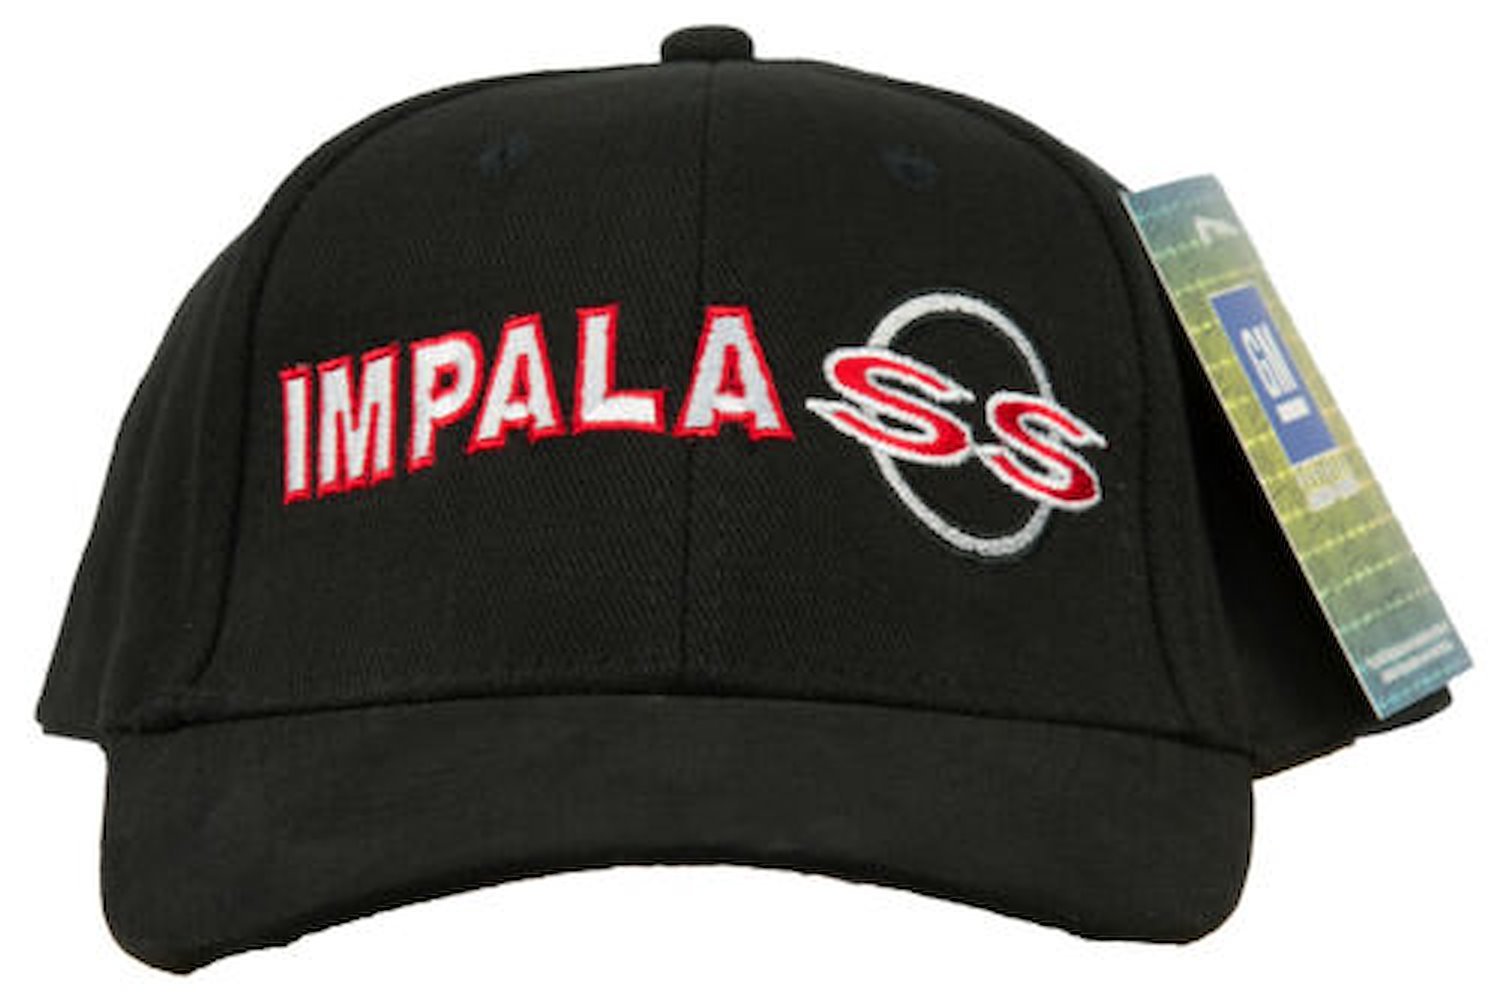 JEGS H117 "Impala SS" Hat